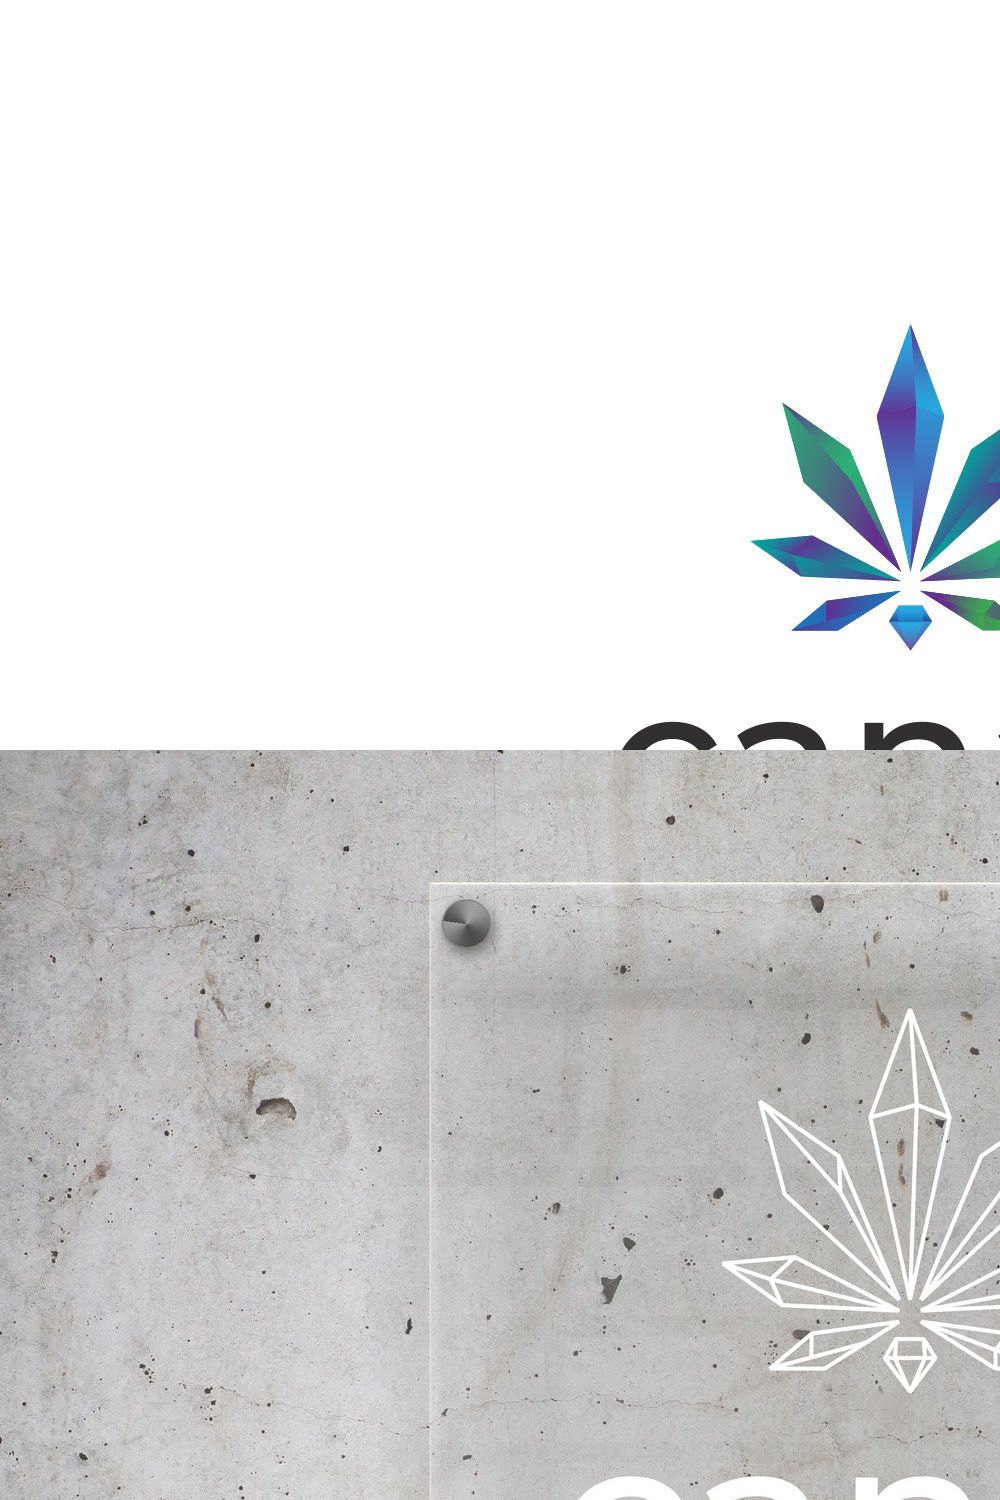 Canaz Cannabis Hemp Marijuana Logo pinterest preview image.